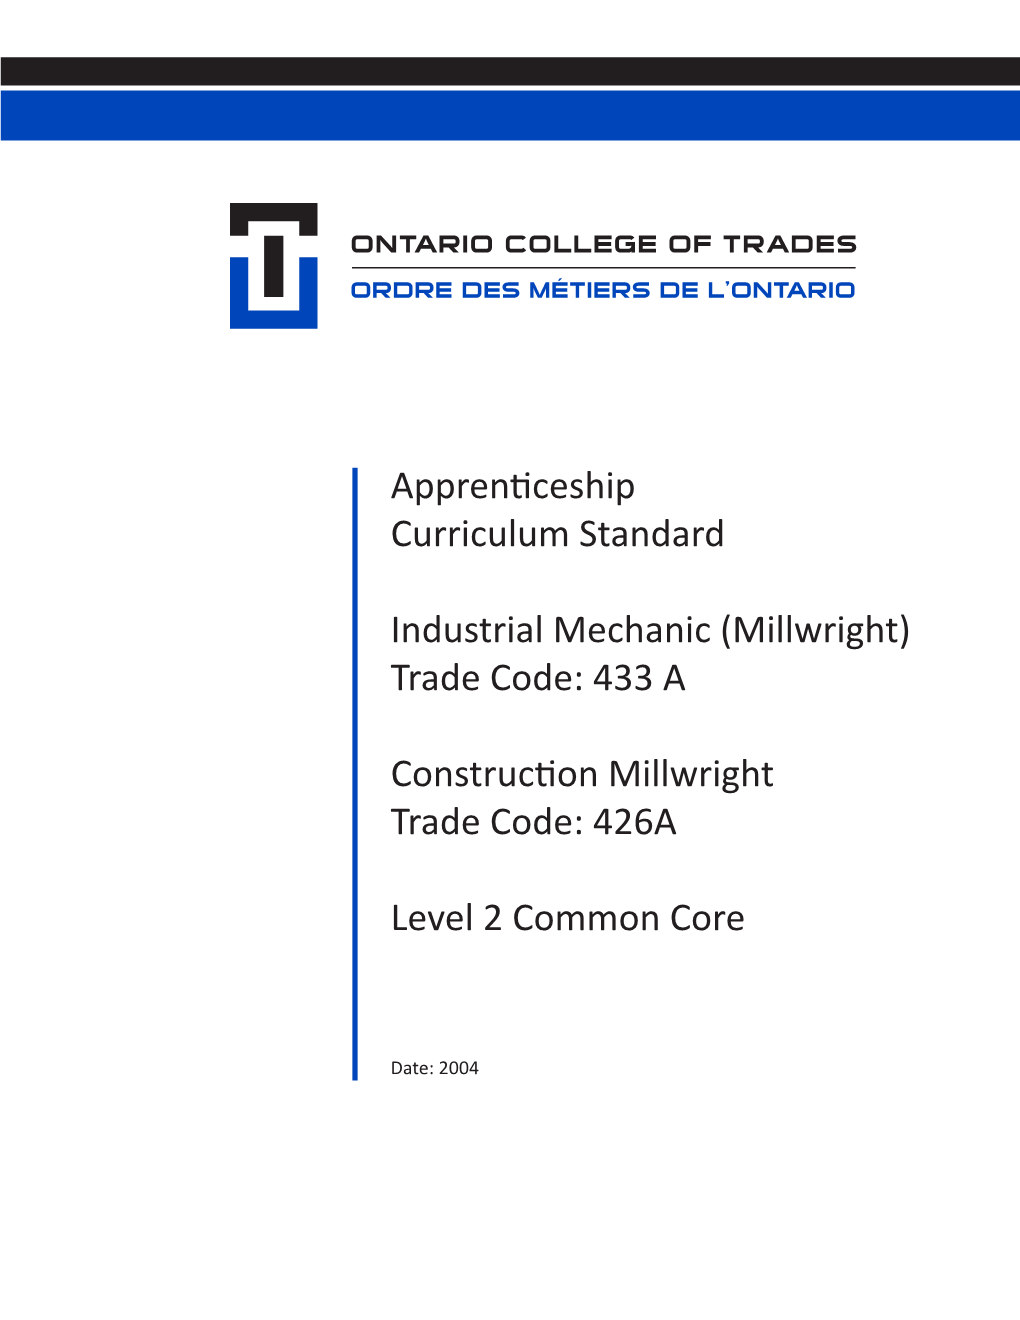 Apprenticeship Curriculum Standard Industrial Mechanic (Millwright)